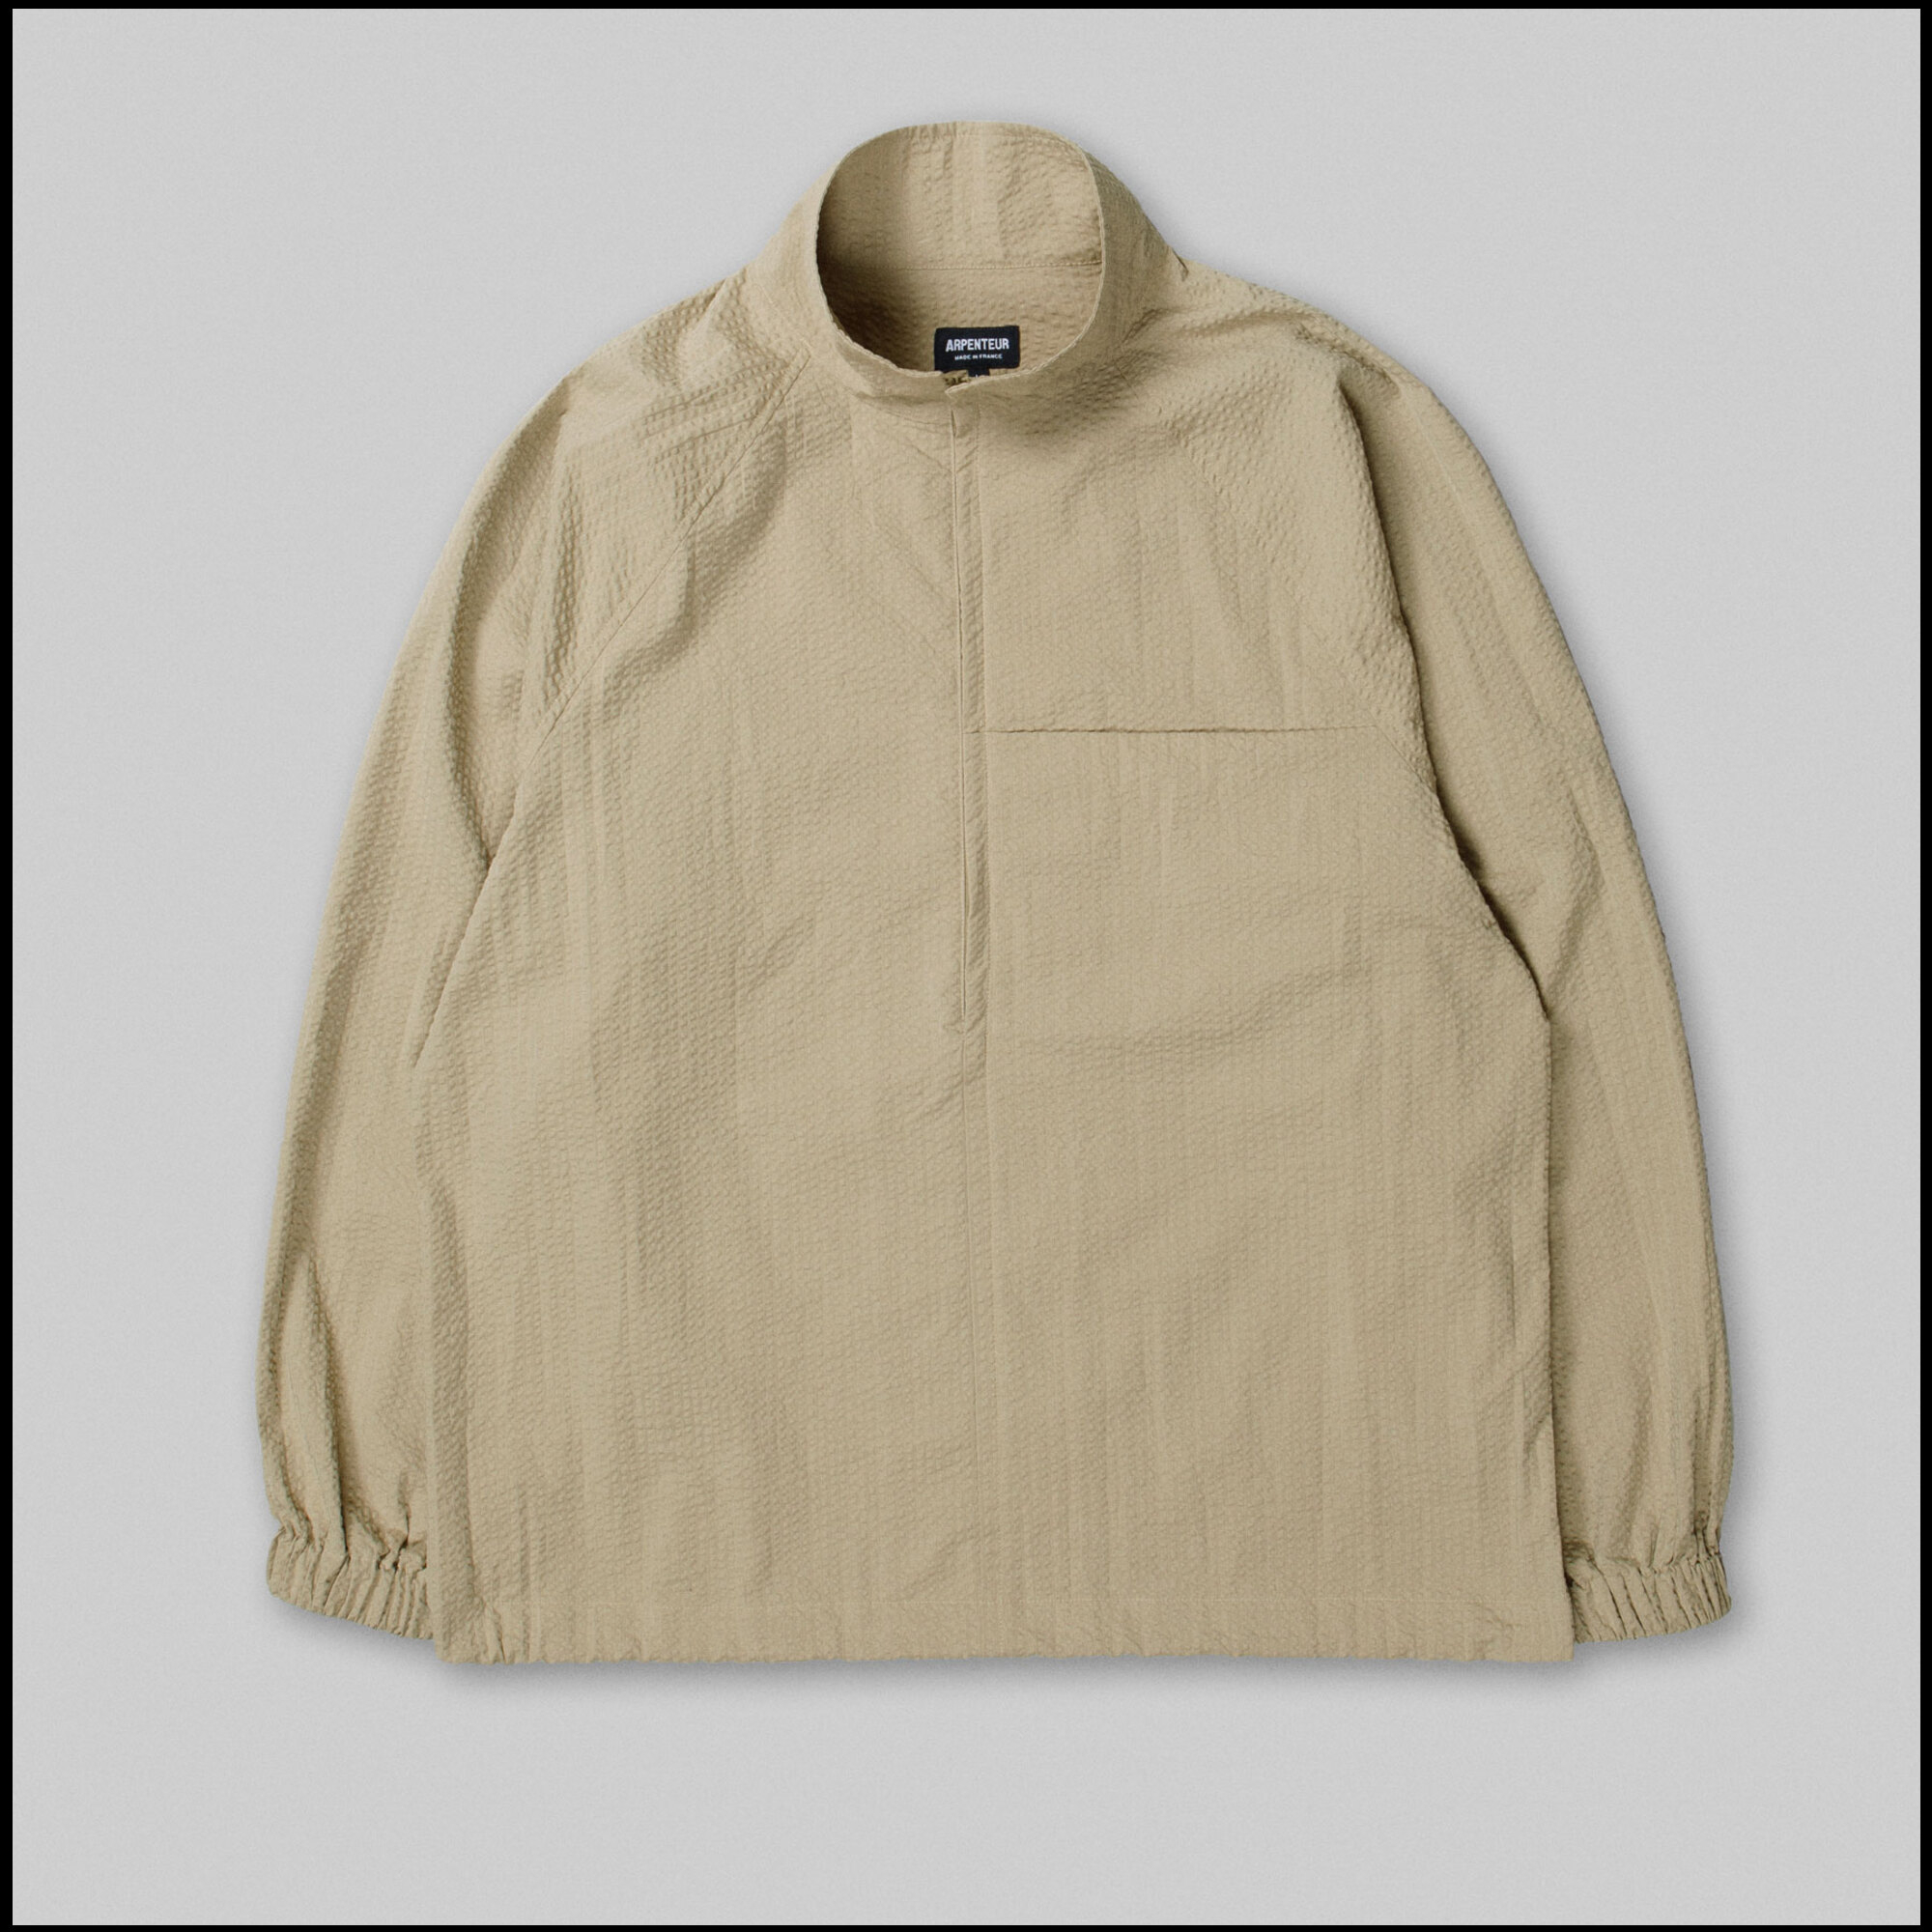 TRACK Jacket by Arpenteur in Sand color